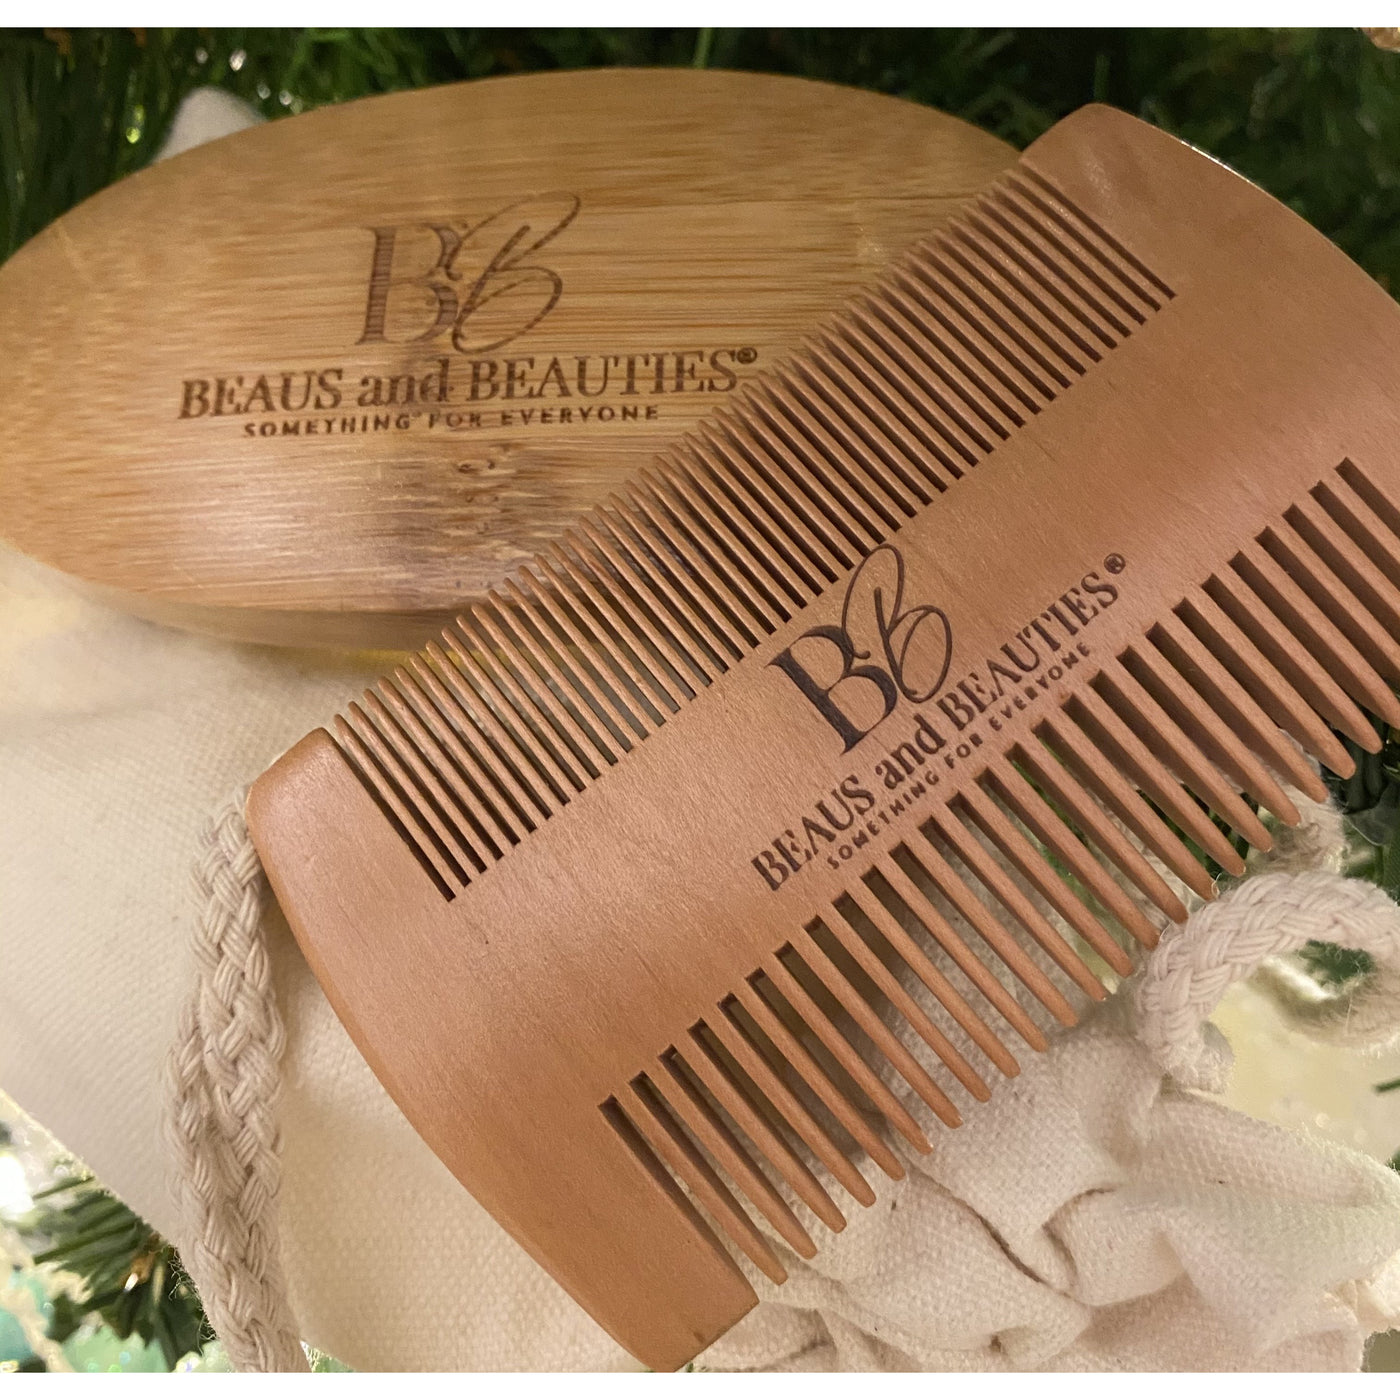 Beard brush and comb set